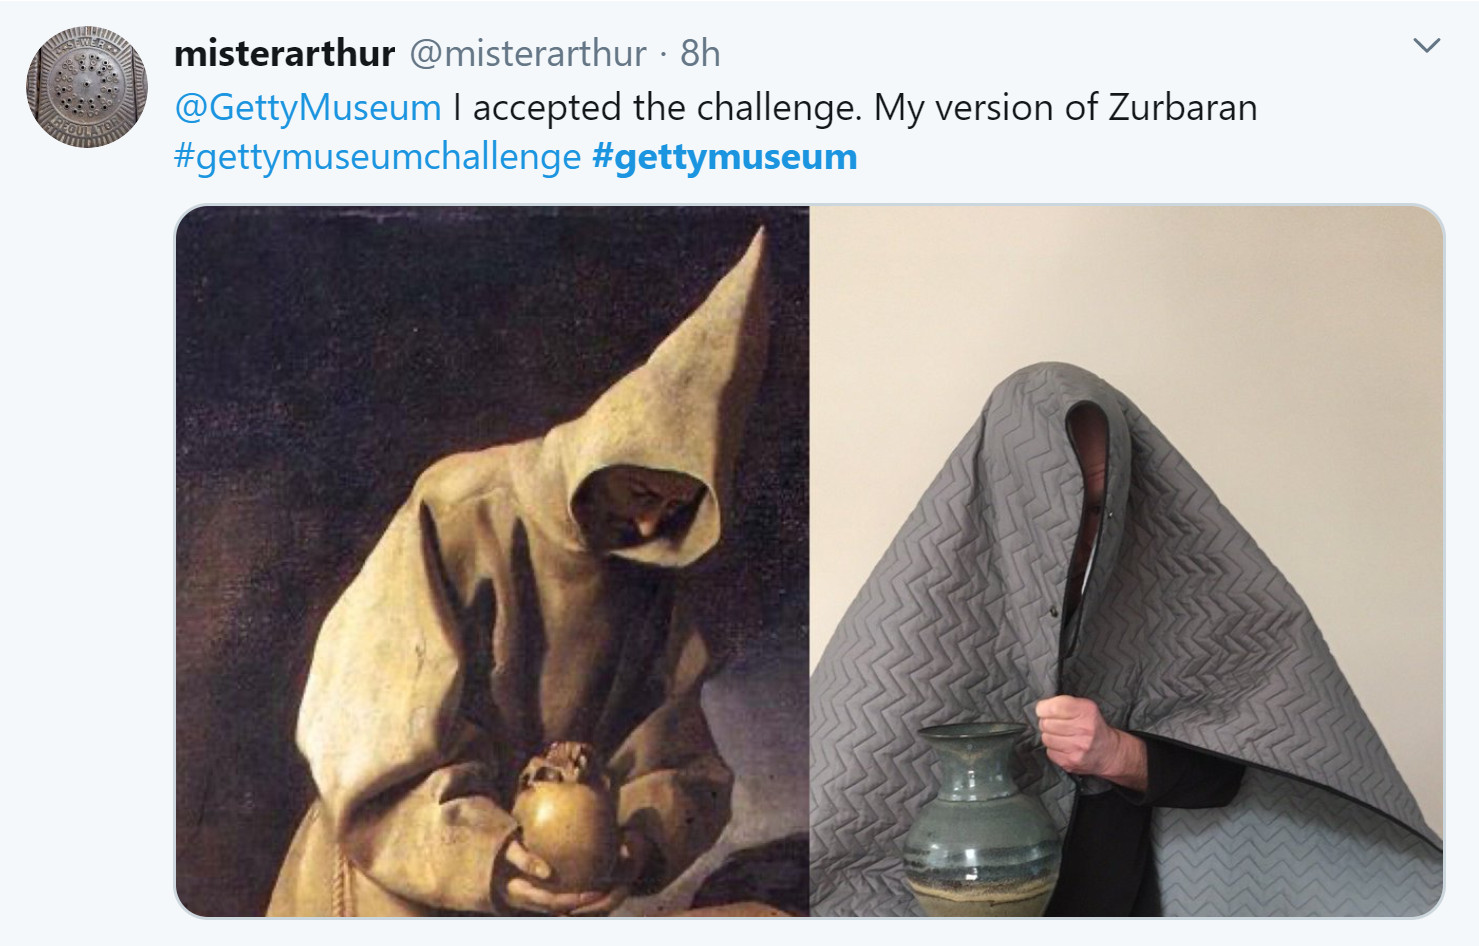 Getty Museum challenge Mrarthur